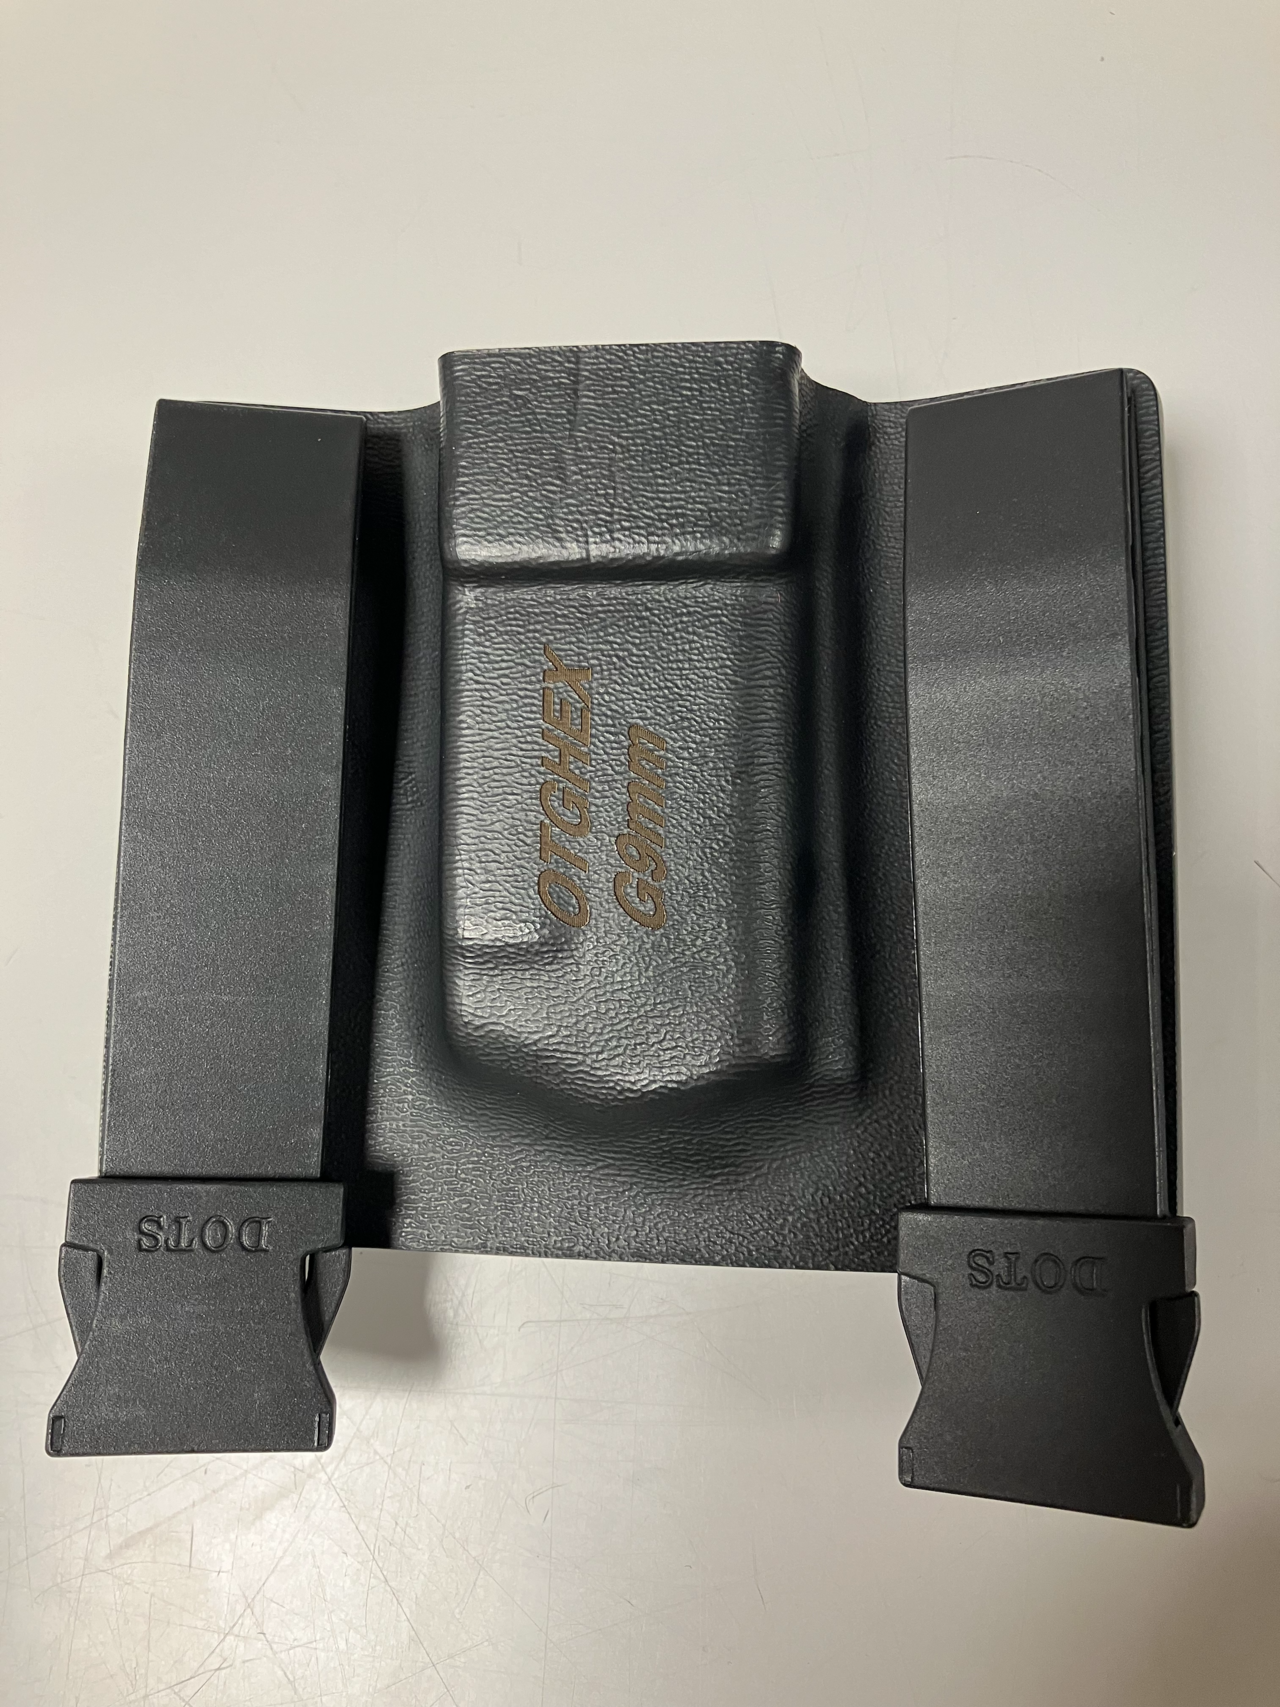 ASP Magasinficka Glock 9/.40 - Enkel Multicam